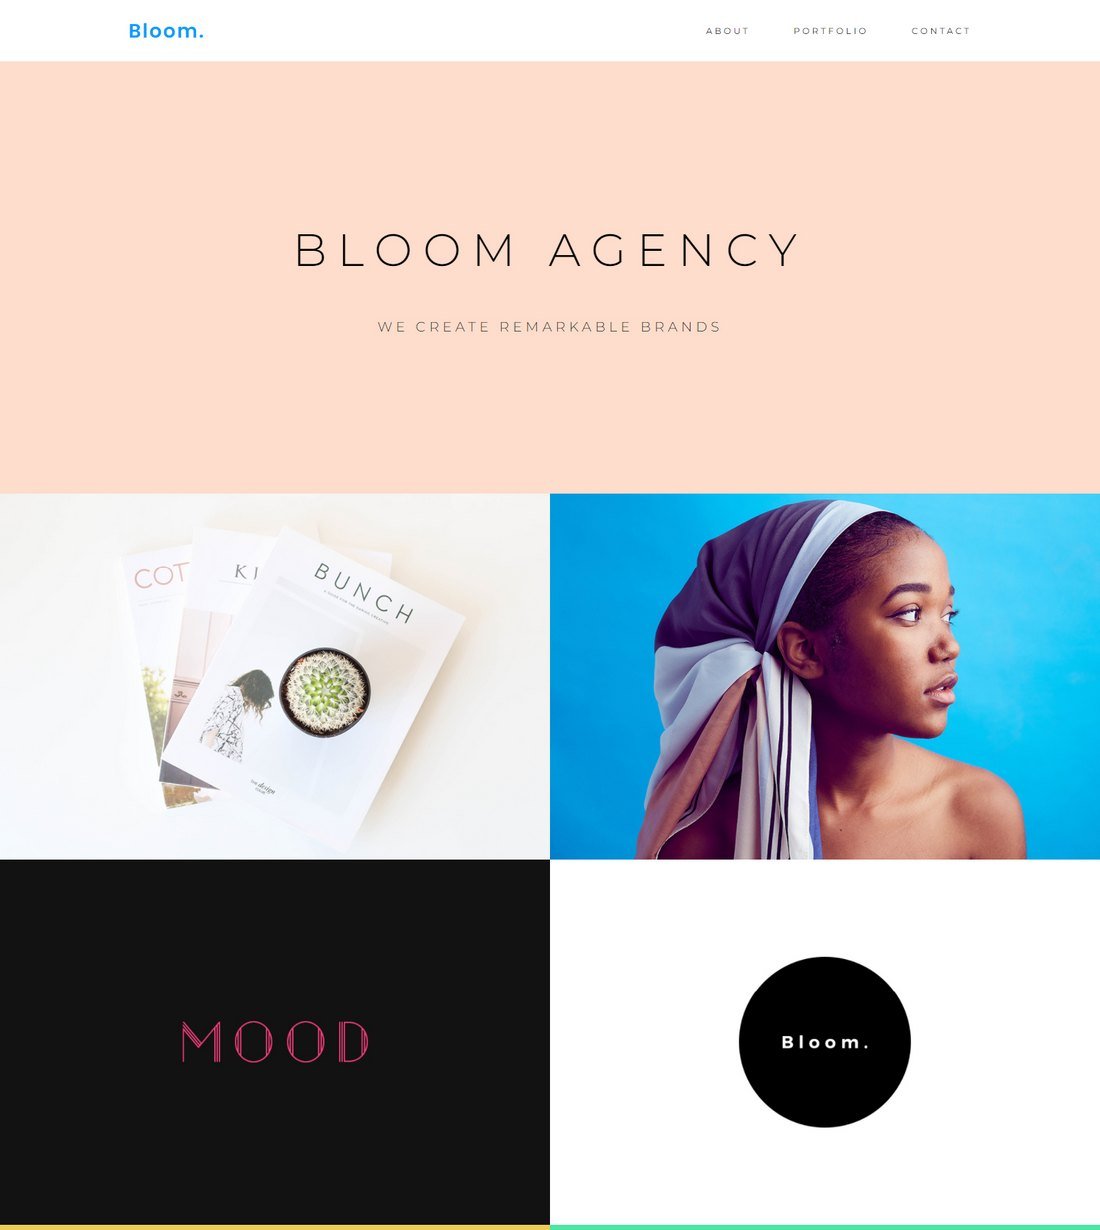 Bloom-Portfolio 10 Rock Solid Website Layout Examples design tips 